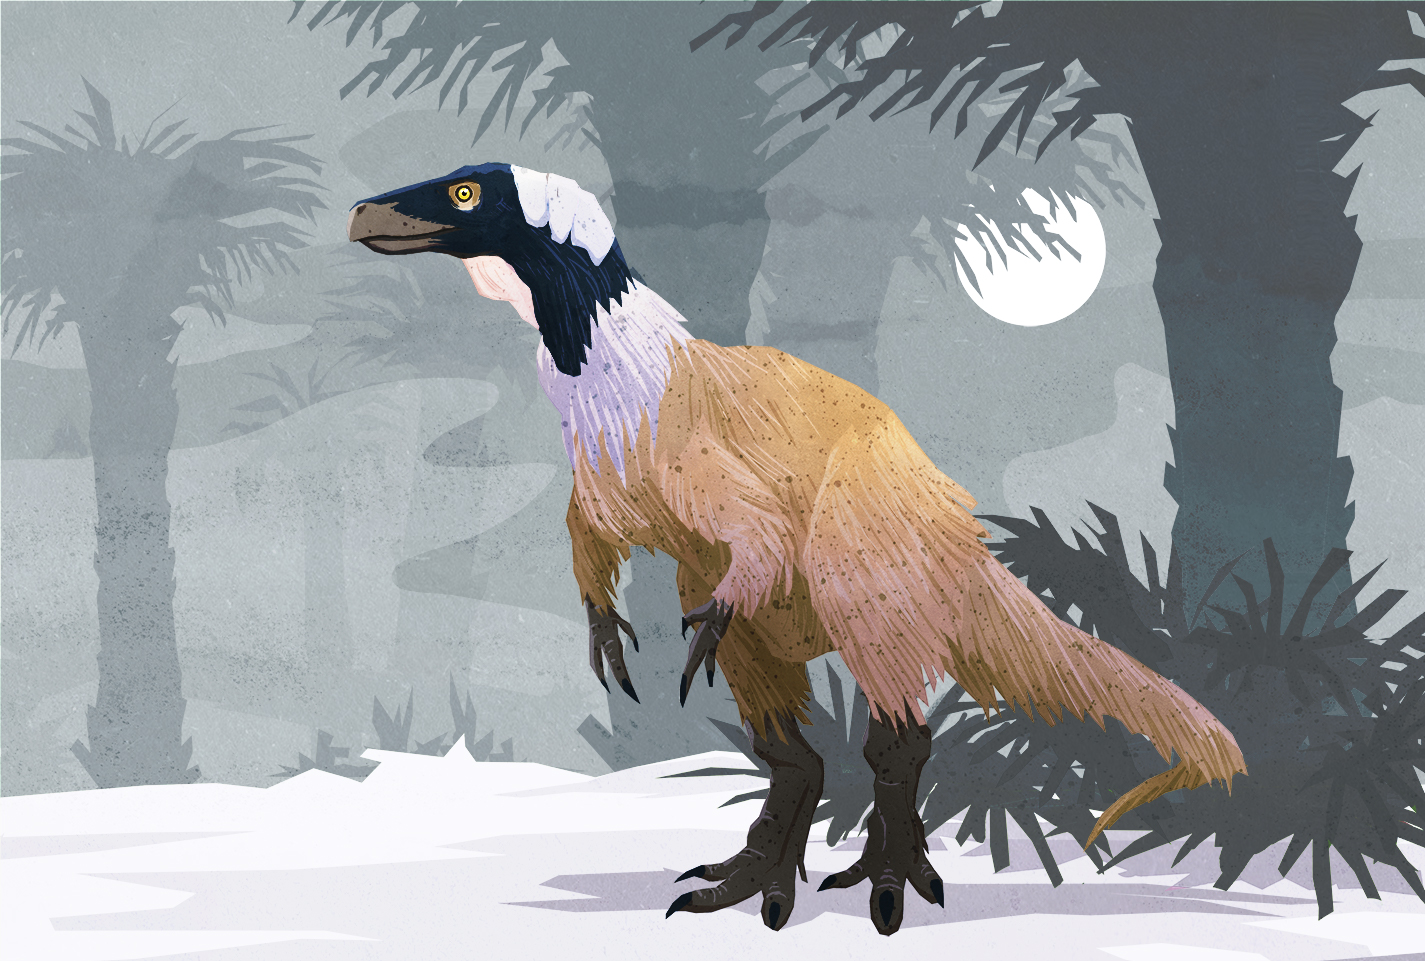 Illustration of Herrerasaurus ischigualastensis by Stavros Svensson Kundromichalis. Shared here with the artist's permission.